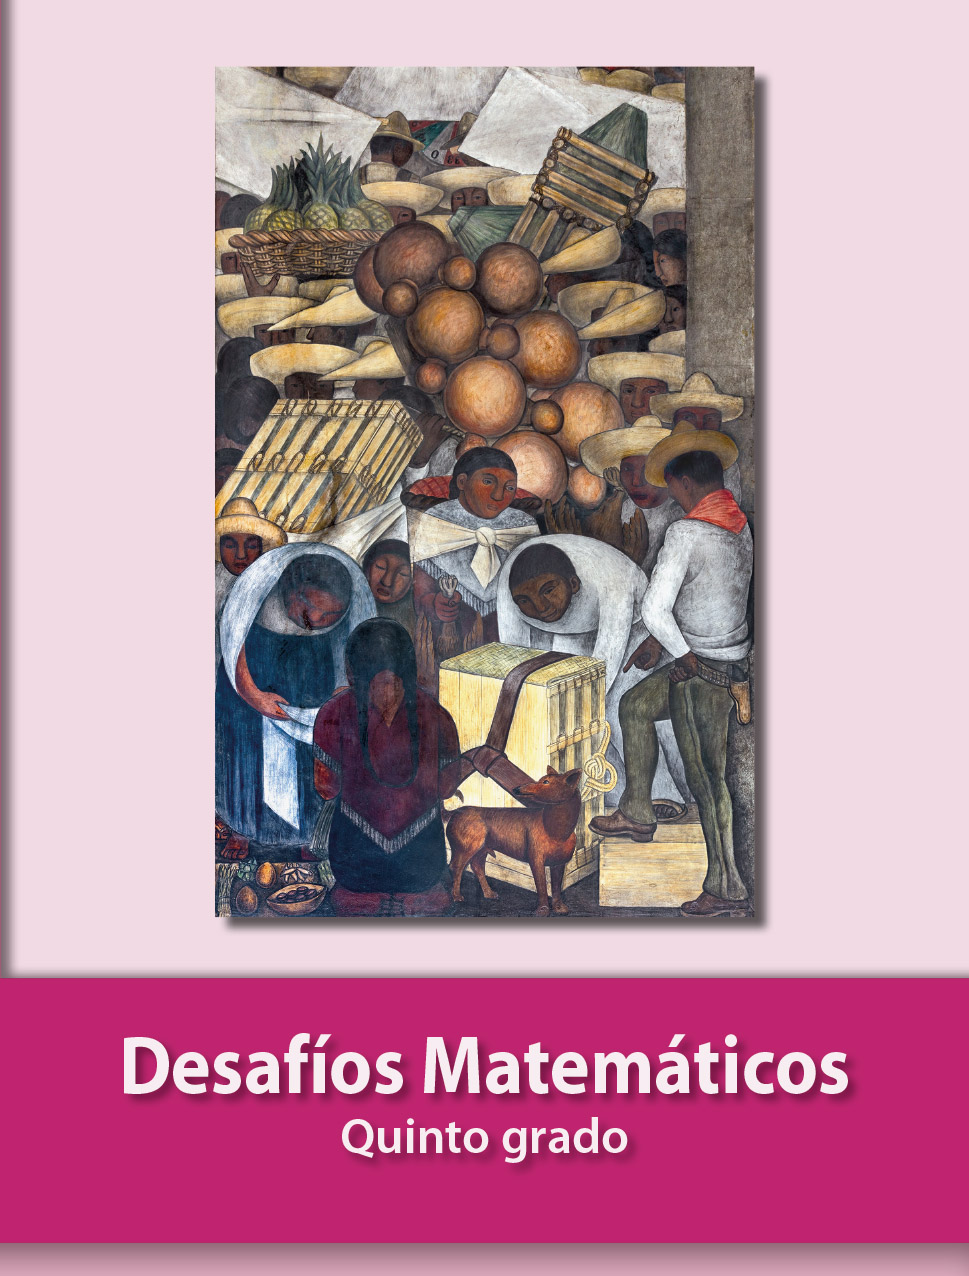 Desafíos Matemáticos Quinto grado 2020-2021 - Libros de ...